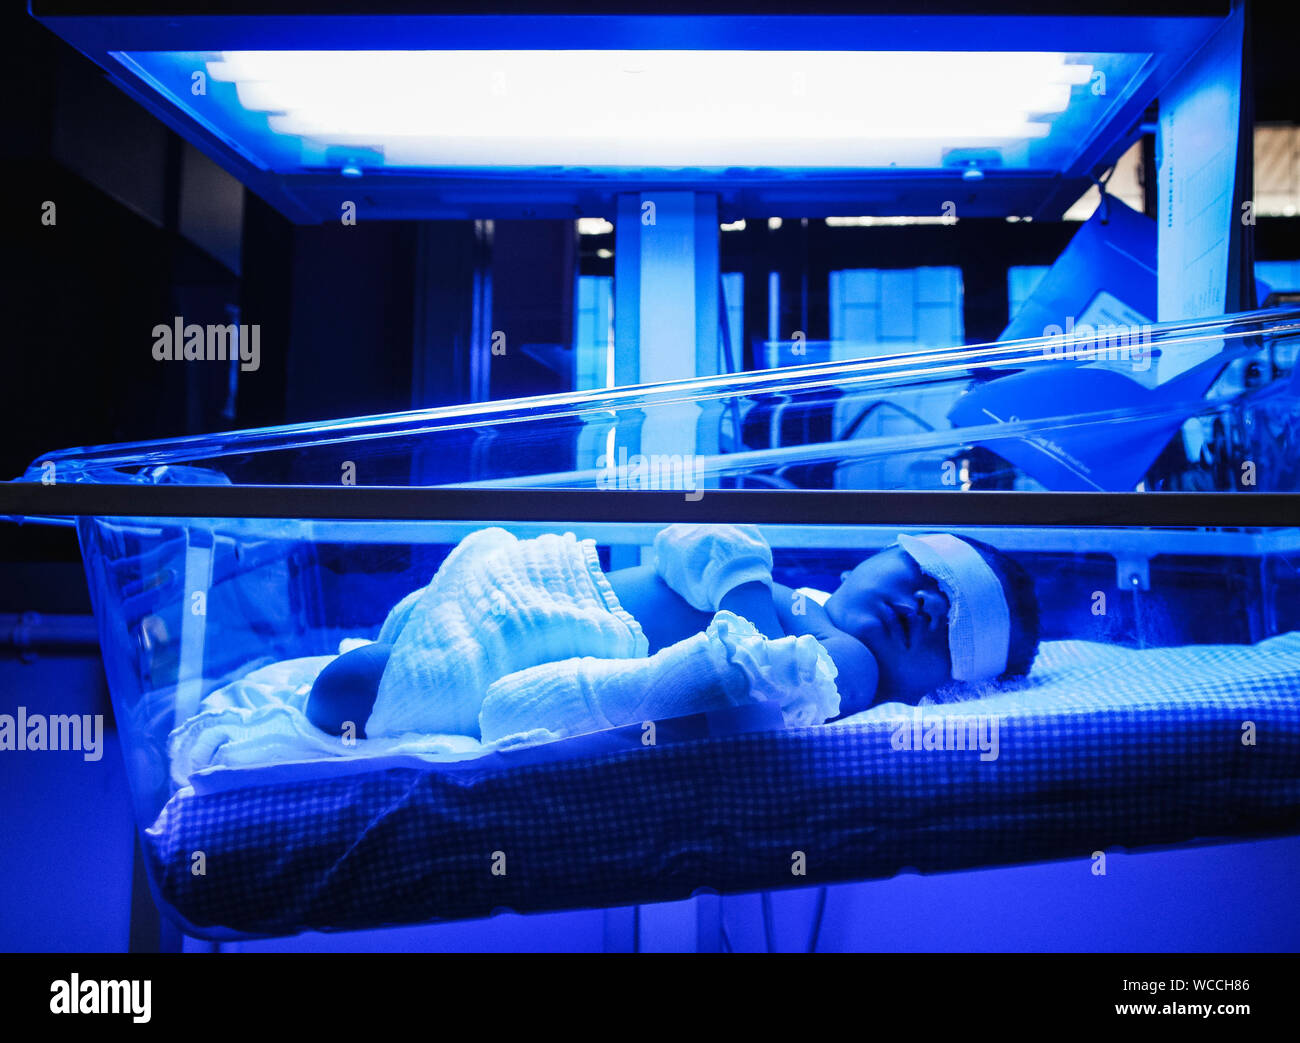 Baby Suffering From Jaundice Lying Under Ultraviolet Light In Incubator  Stock Photo - Alamy